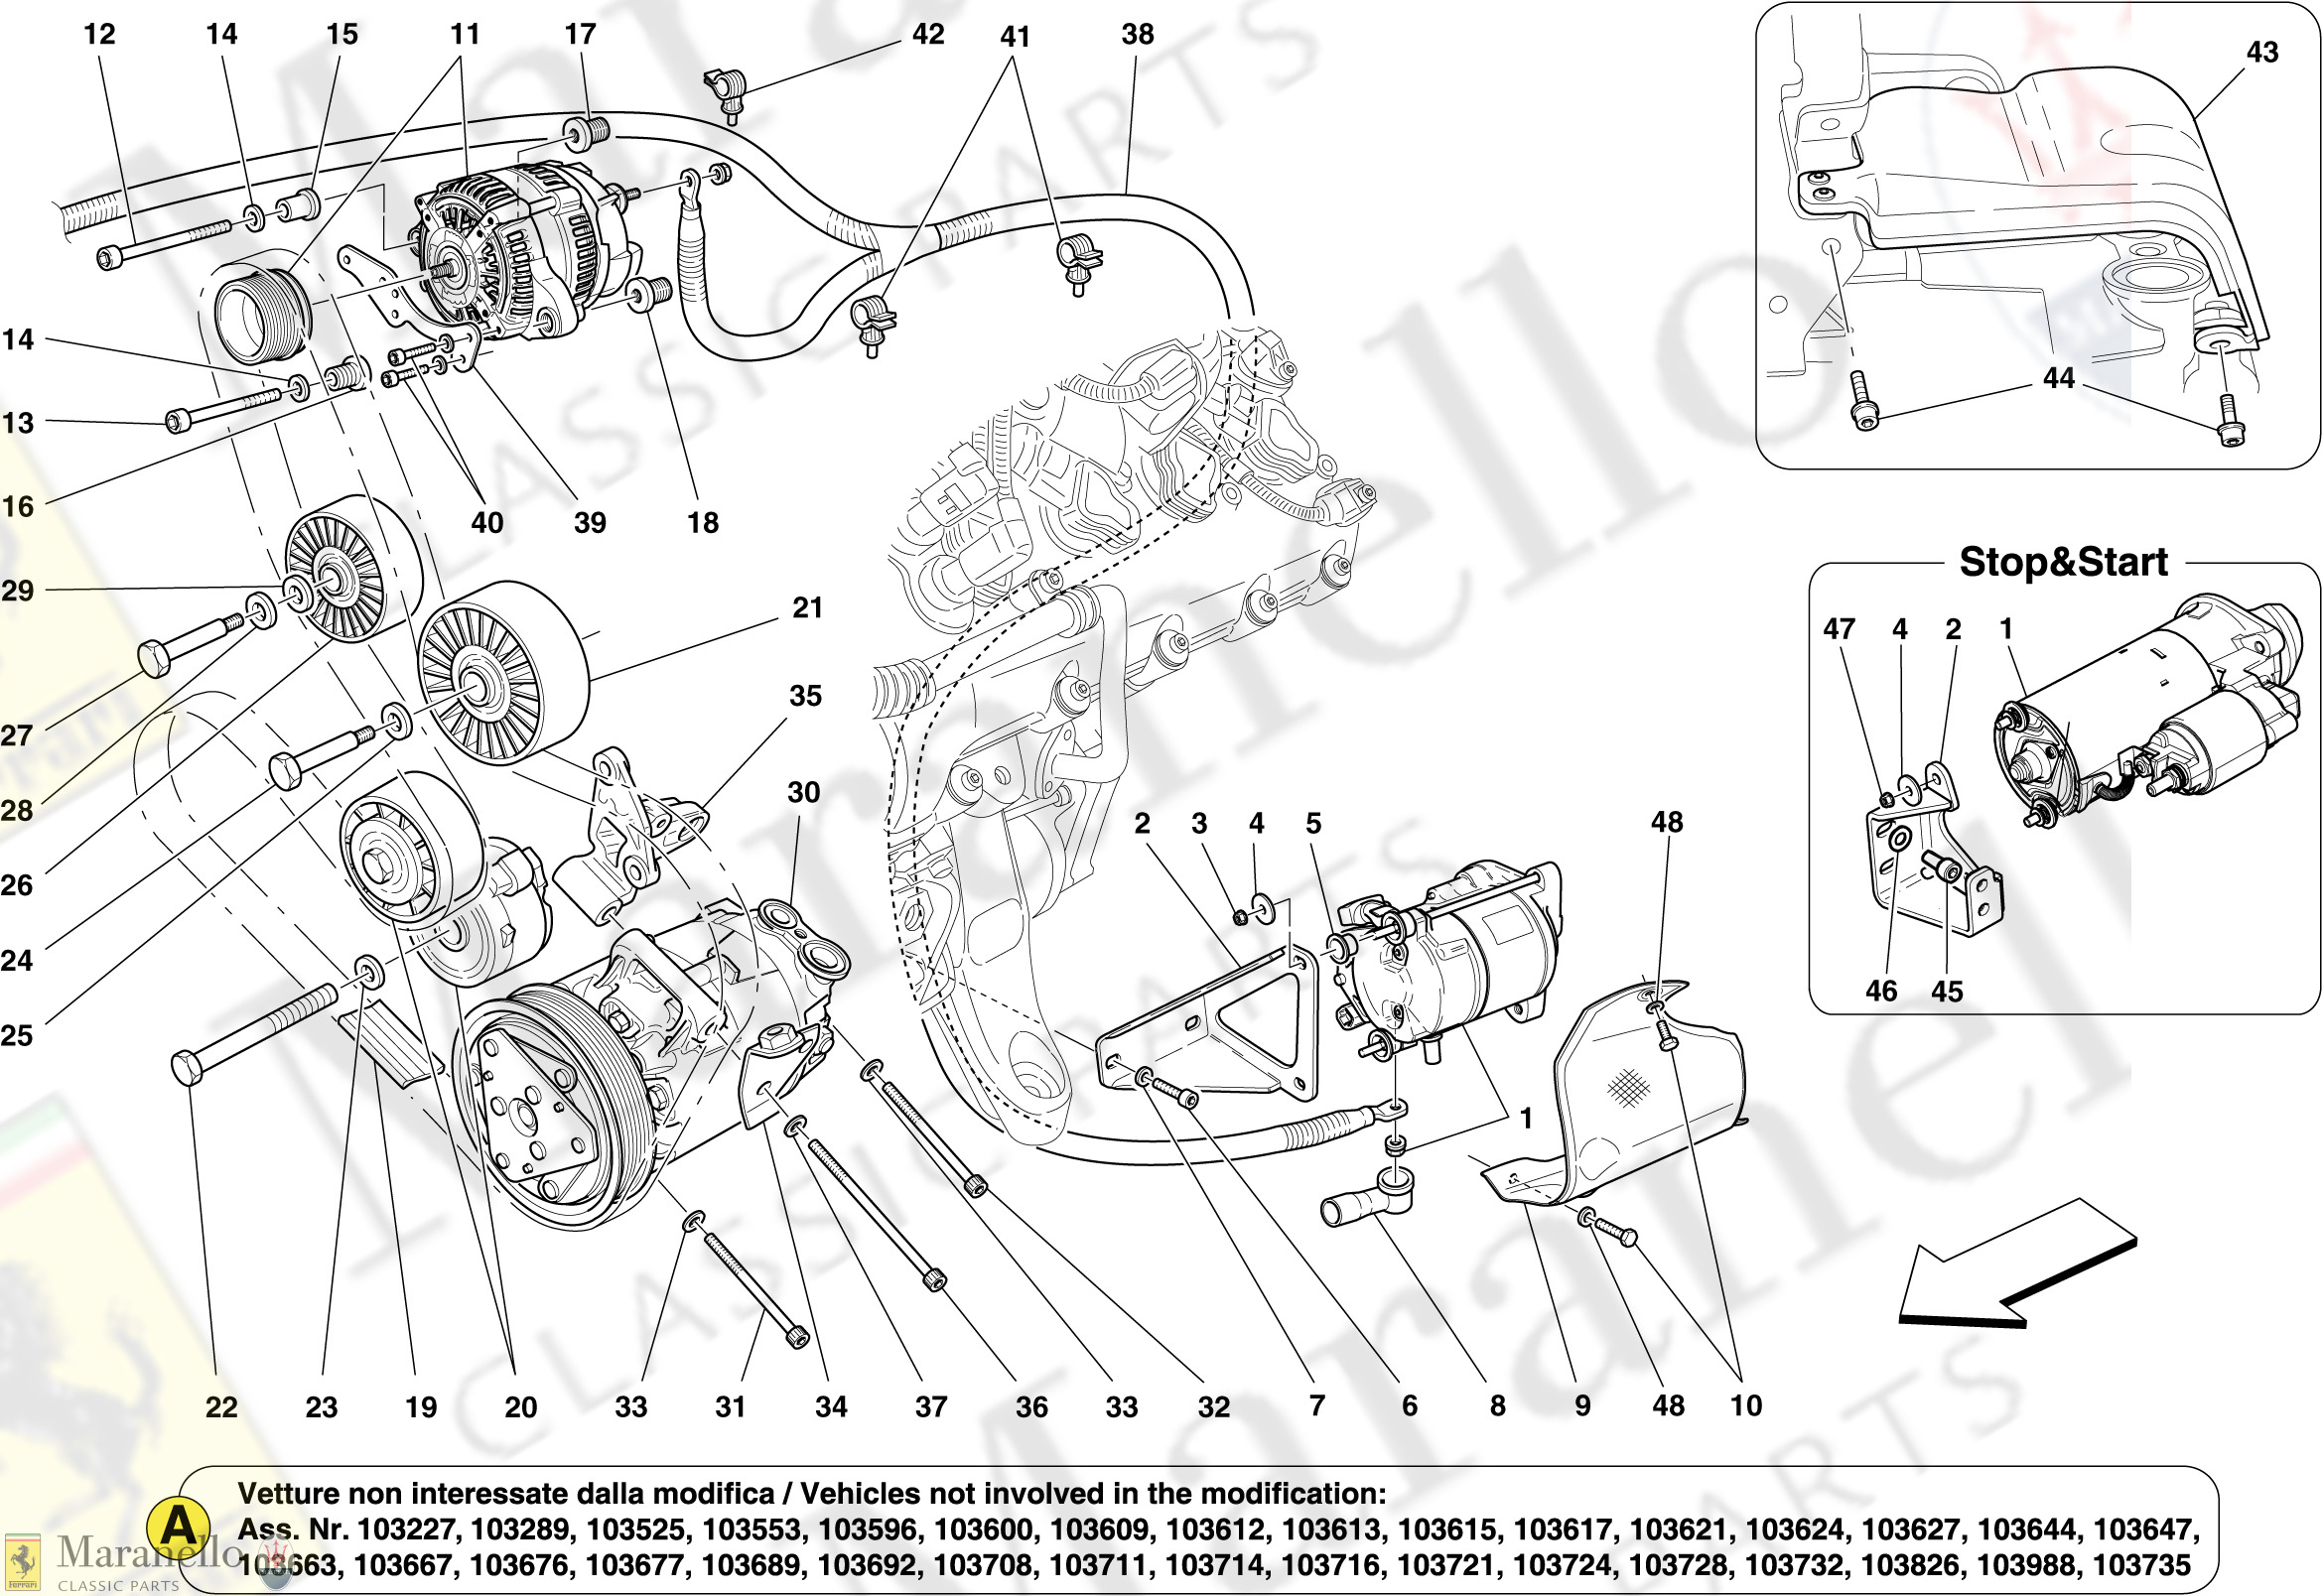 051 - Alternator, Starter Motor And Ac Compressor